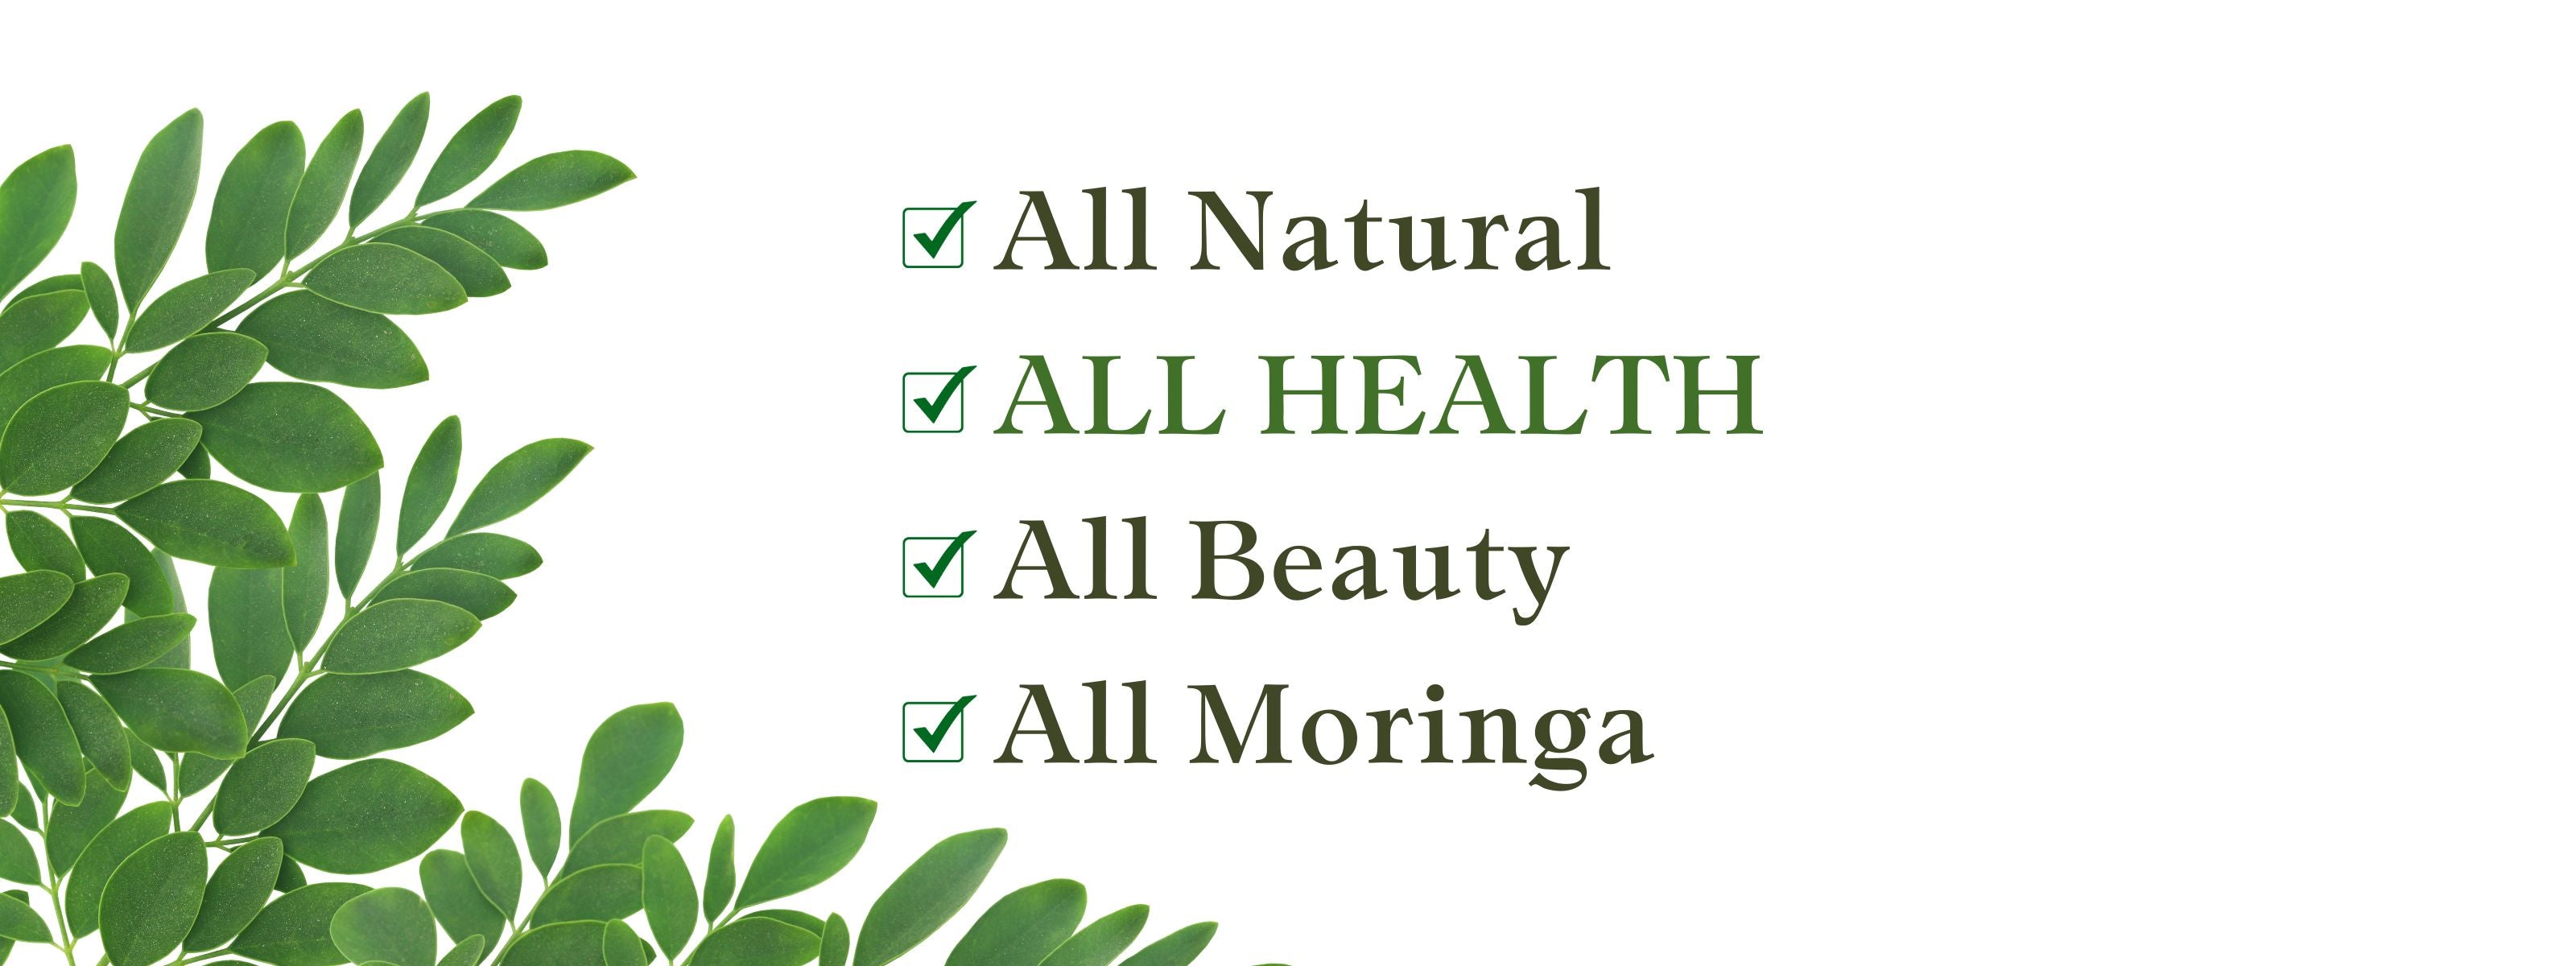 moringa leaf powder benefits Superfood - Boost Immunity, Enhance Energy, and Support Wellness